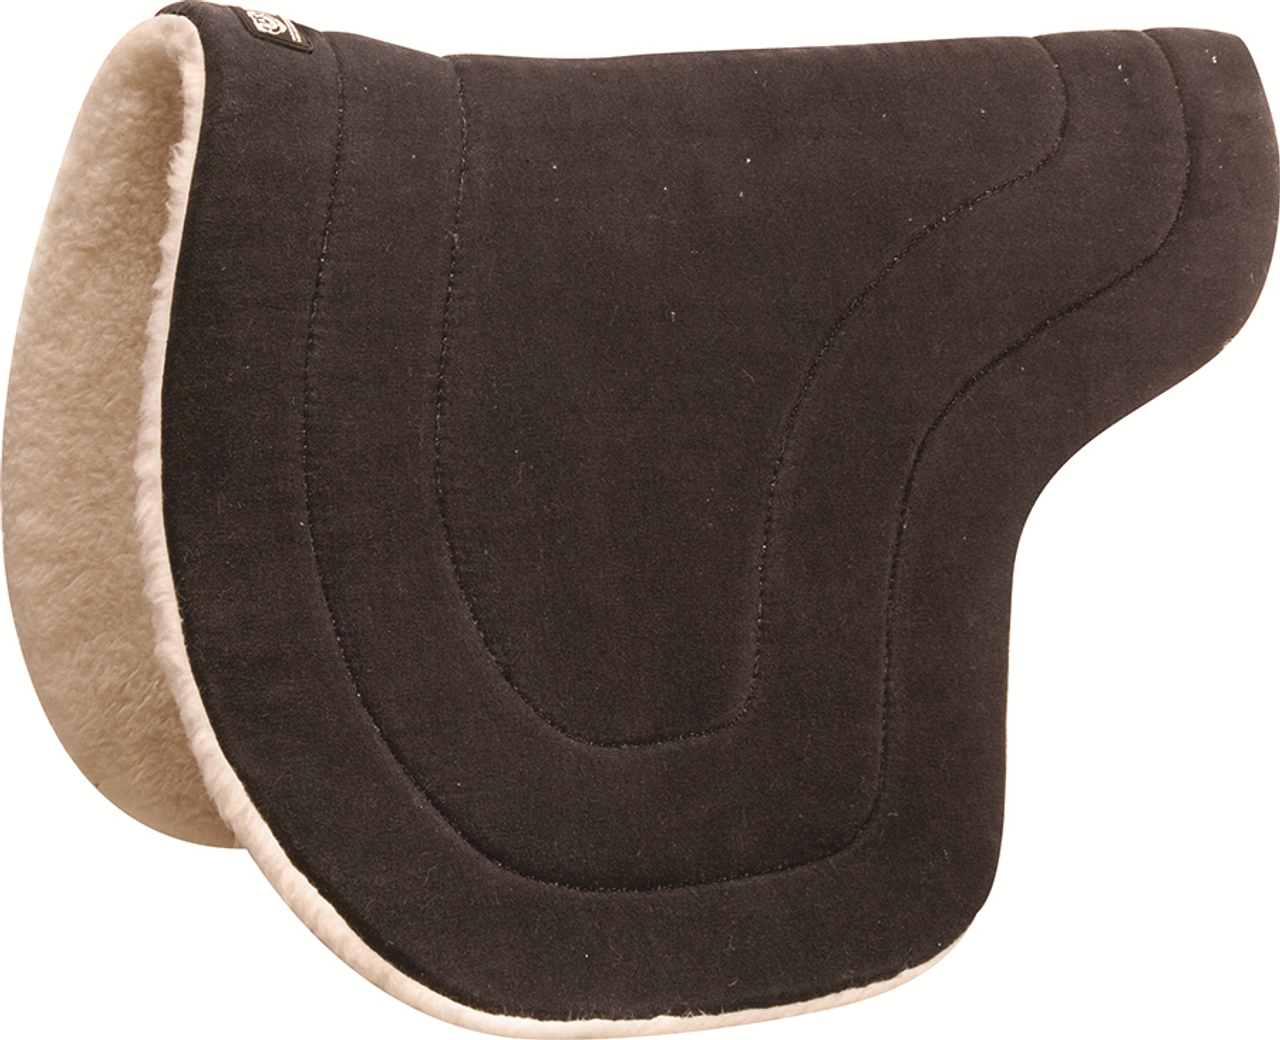 Cashel Race and Exercise Cushion Foam Saddle Pad, 1/2-inch Thick